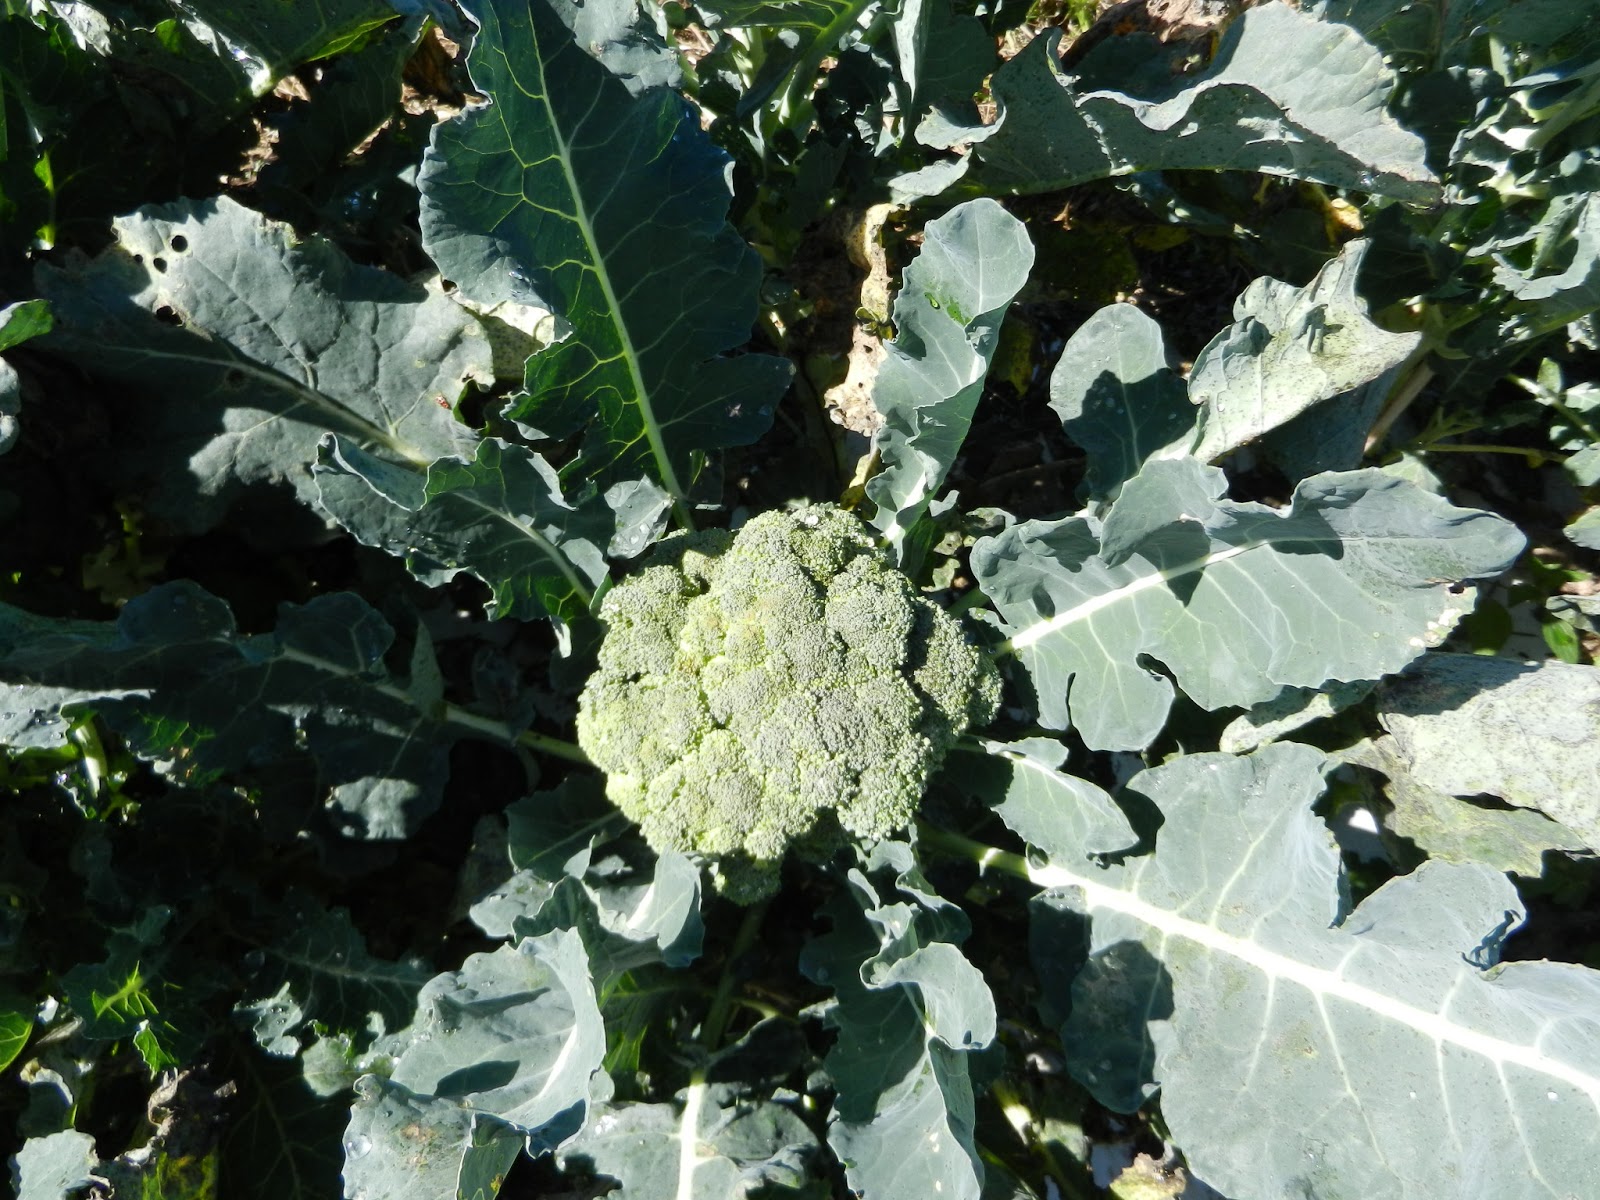 Fiesta broccoli grown in 2012